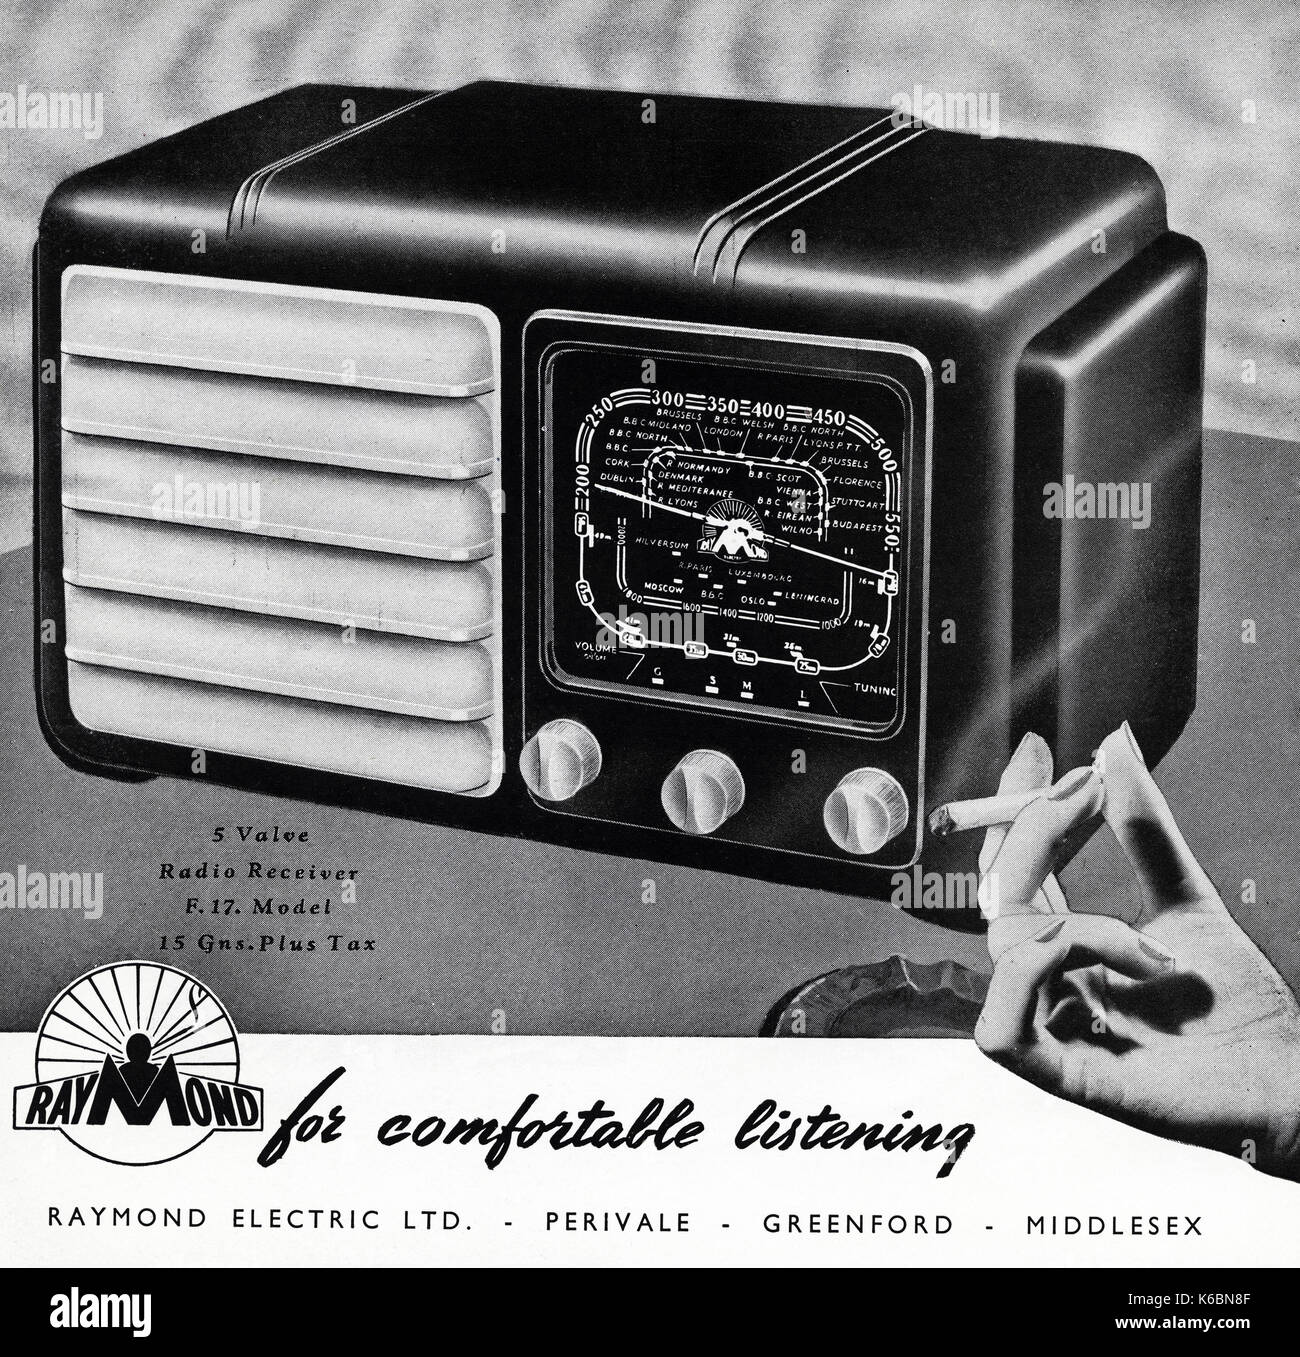 1940s old vintage original advert advertising radio by Raymond Electric Ltd  in magazine circa 1947 when supplies were still restricted under post-war  rationing Stock Photo - Alamy